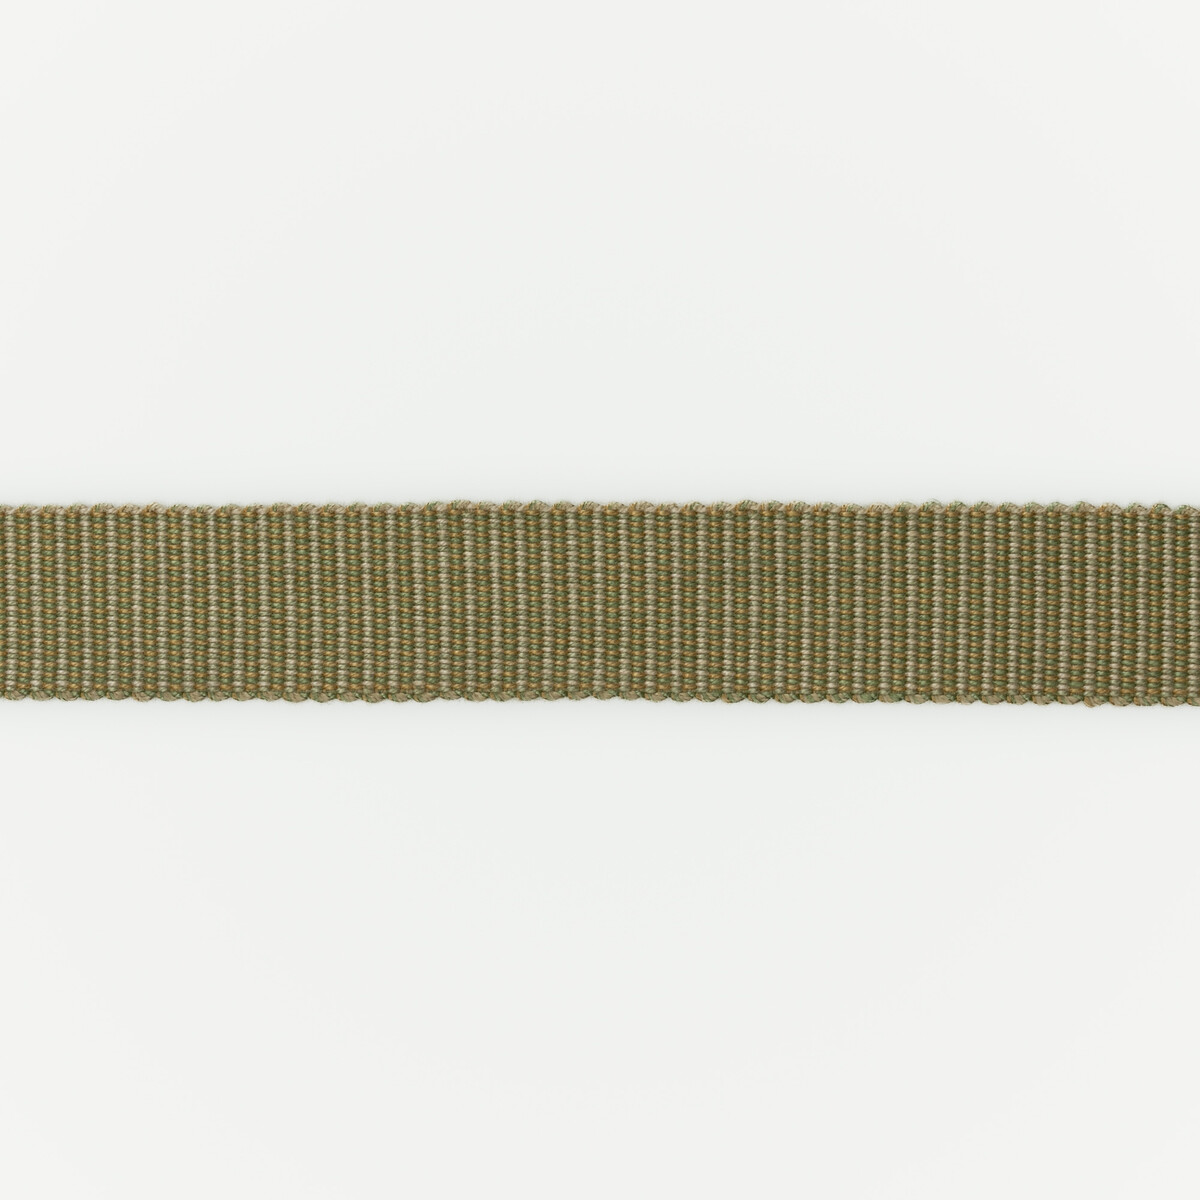 G P & J Baker T6026.730.0 Perandor Plain Braid Trim Fabric in Green/gold